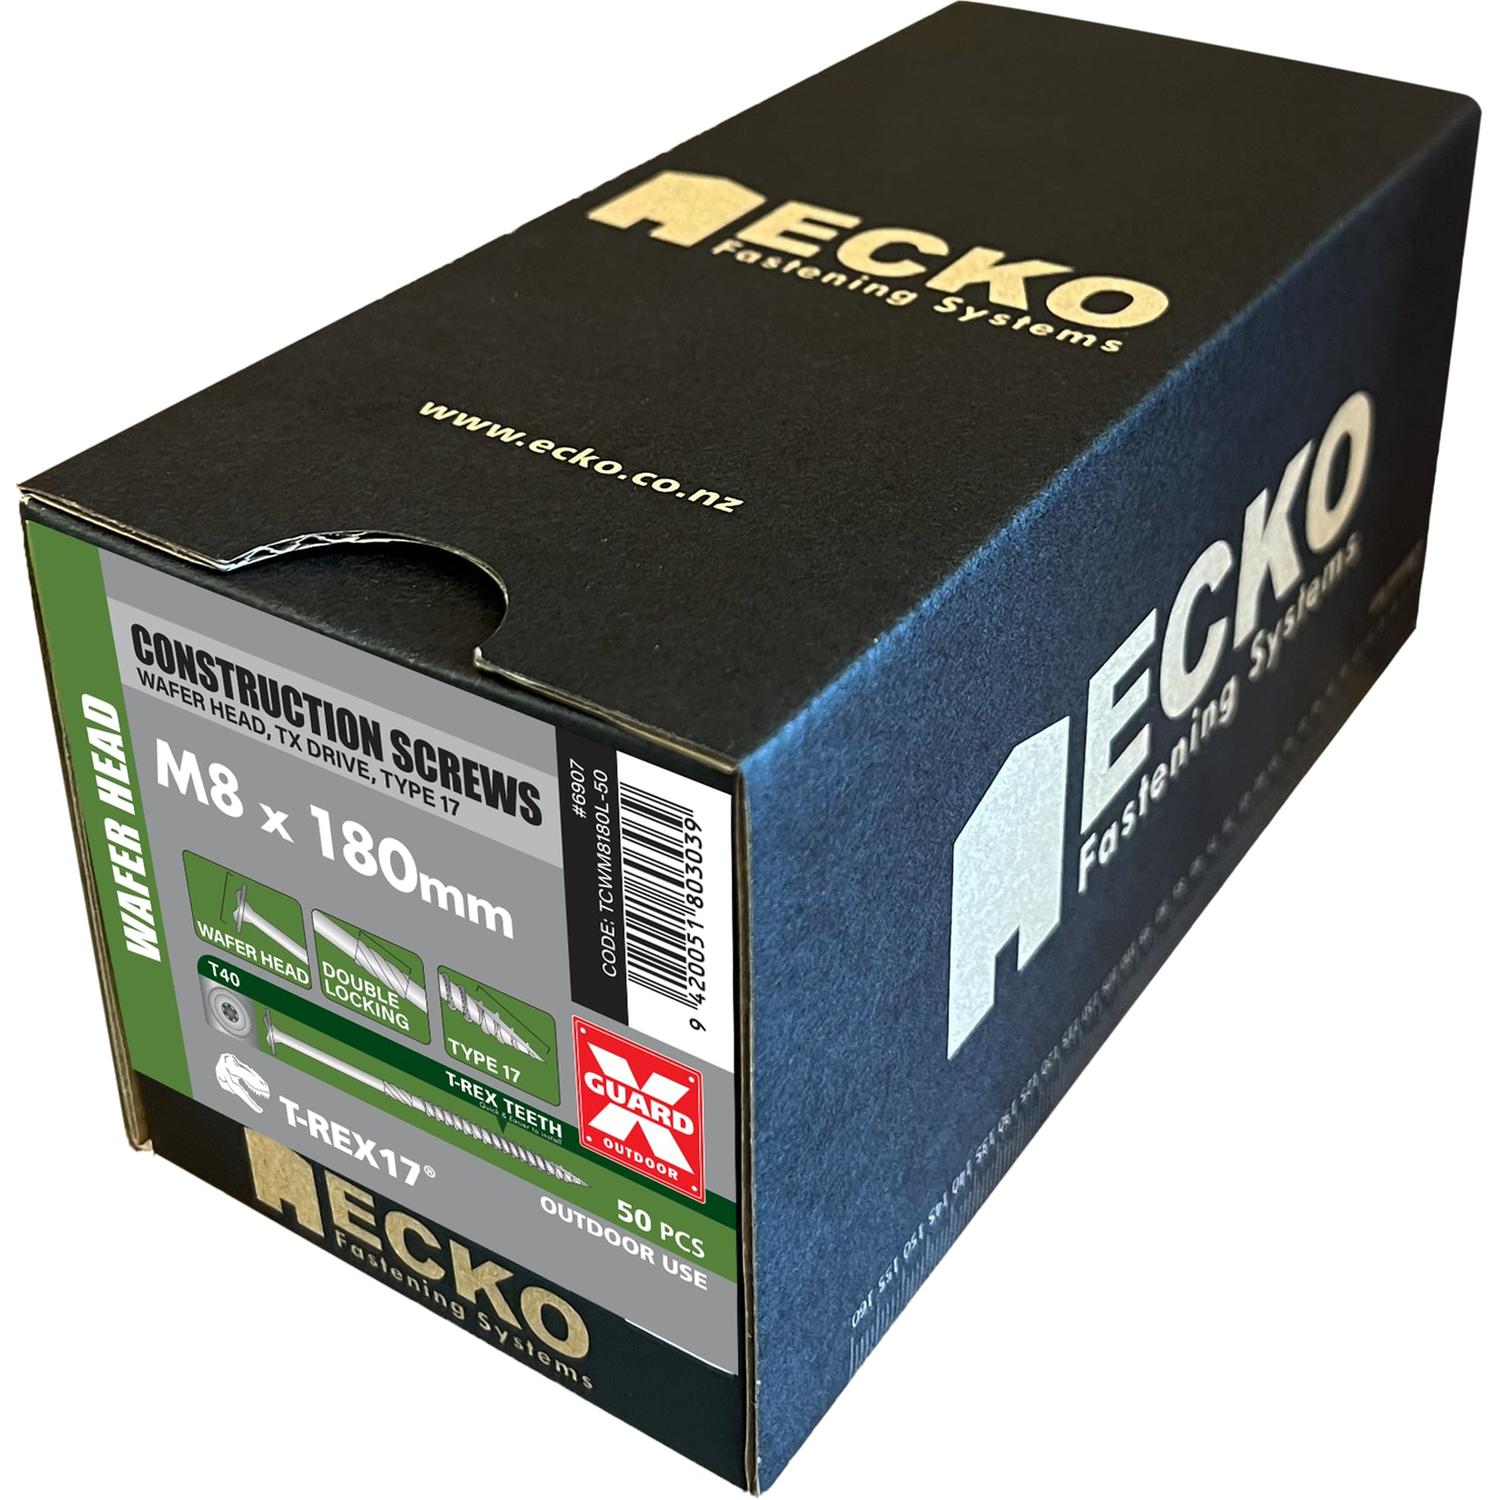 Ecko T-Rex17 Construction Screws M8 X 180Mm (500 Pack)